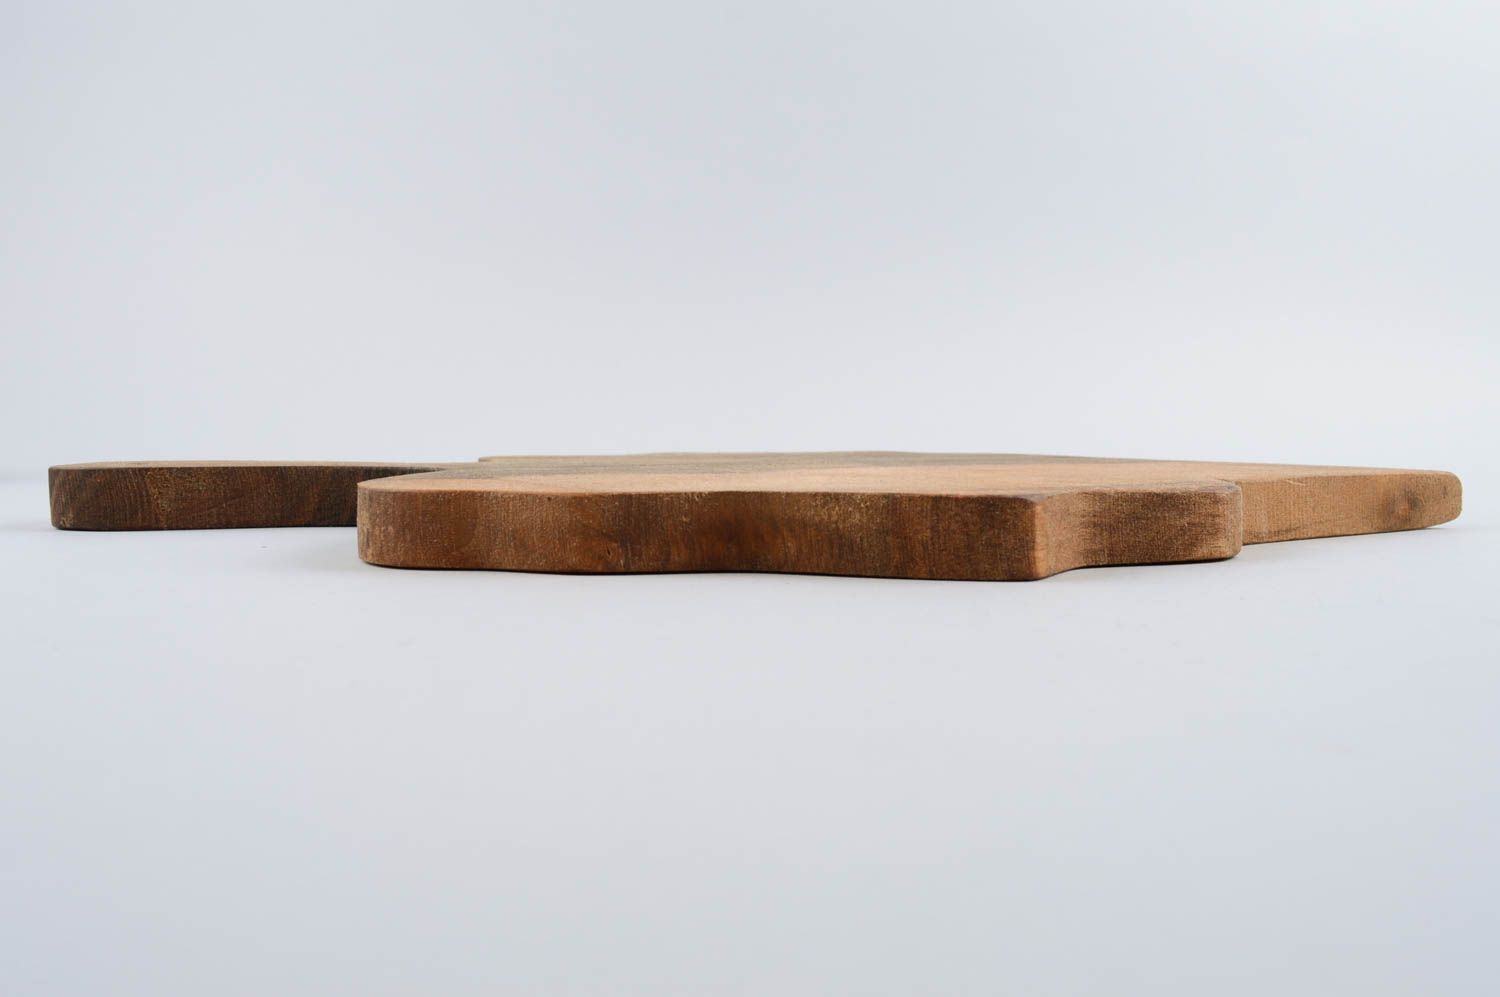 Shan Wooden Chopping Board – Buildmat